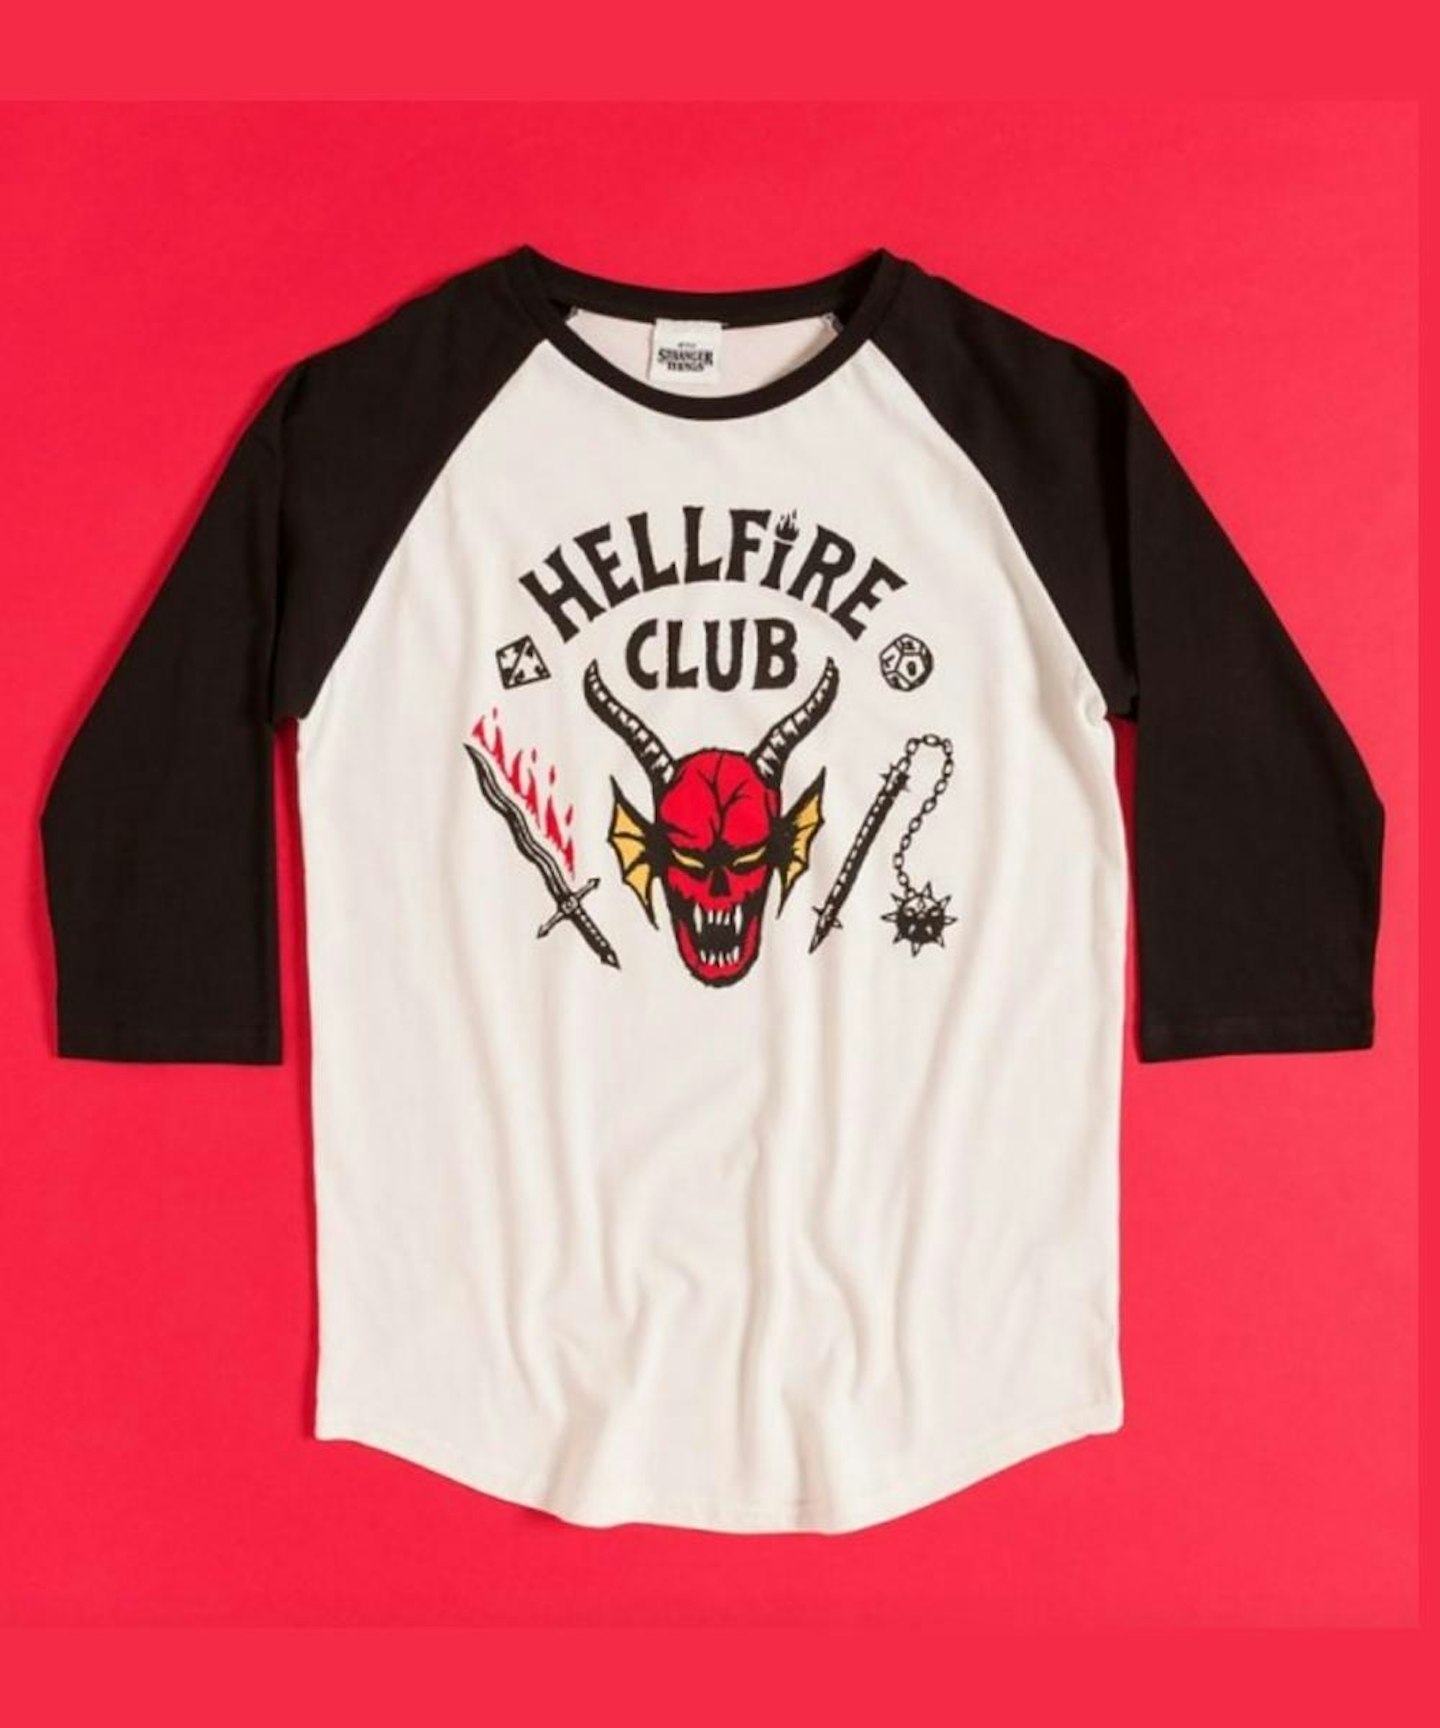 Stranger Things - Hellfire Club Baseball 3/4 Sleeve Tee - Shirtstore